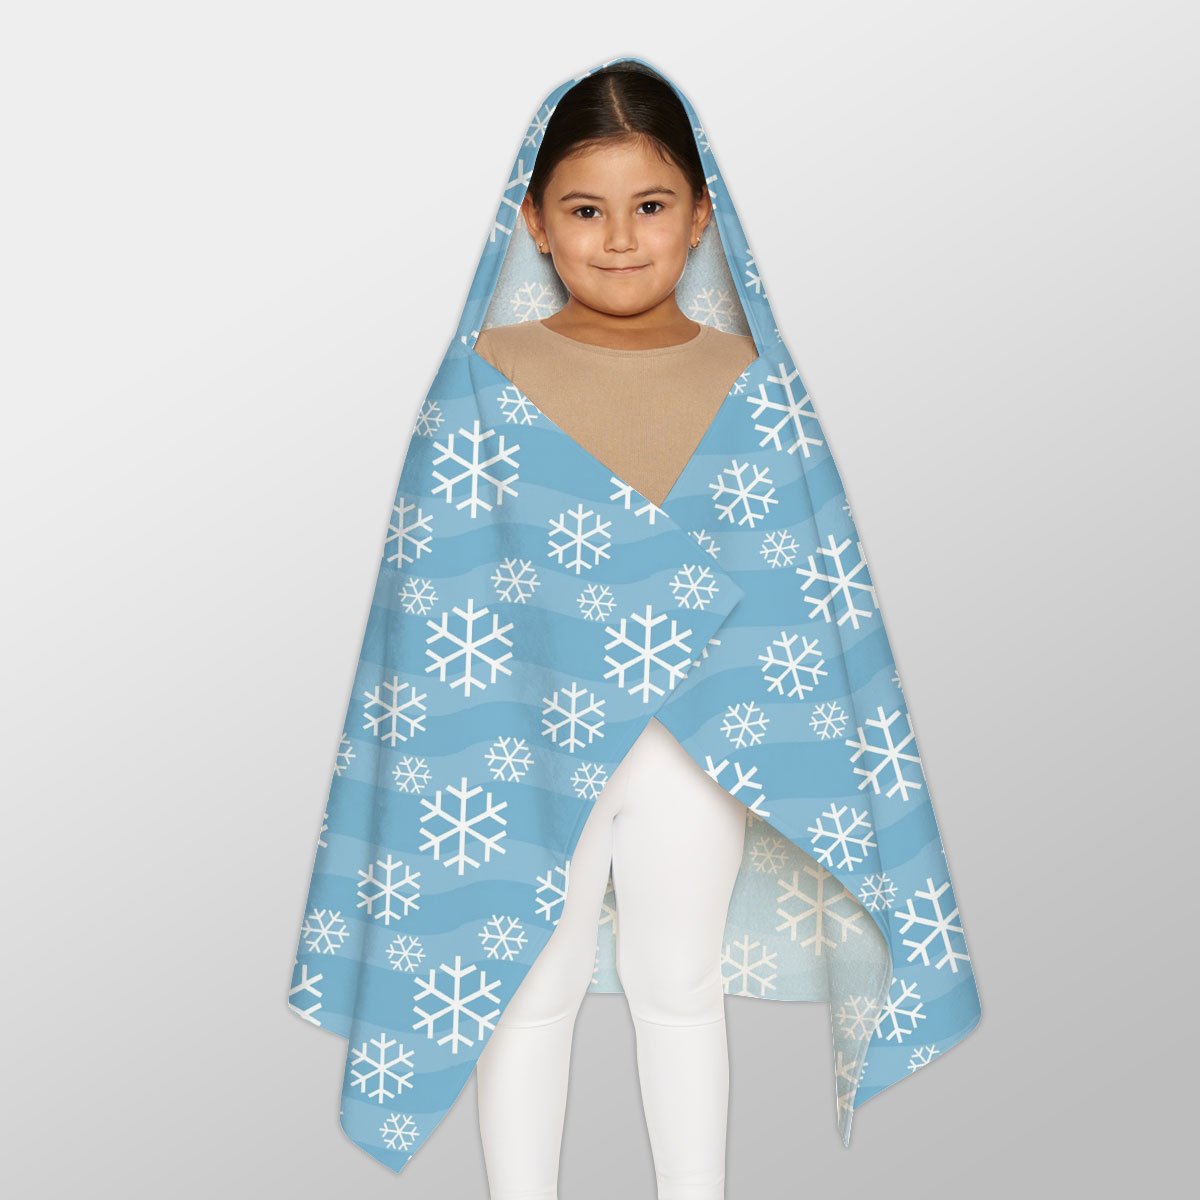 Snowflake, Snowflake Background, Snowflake Pattern 7 Youth Hooded Towel